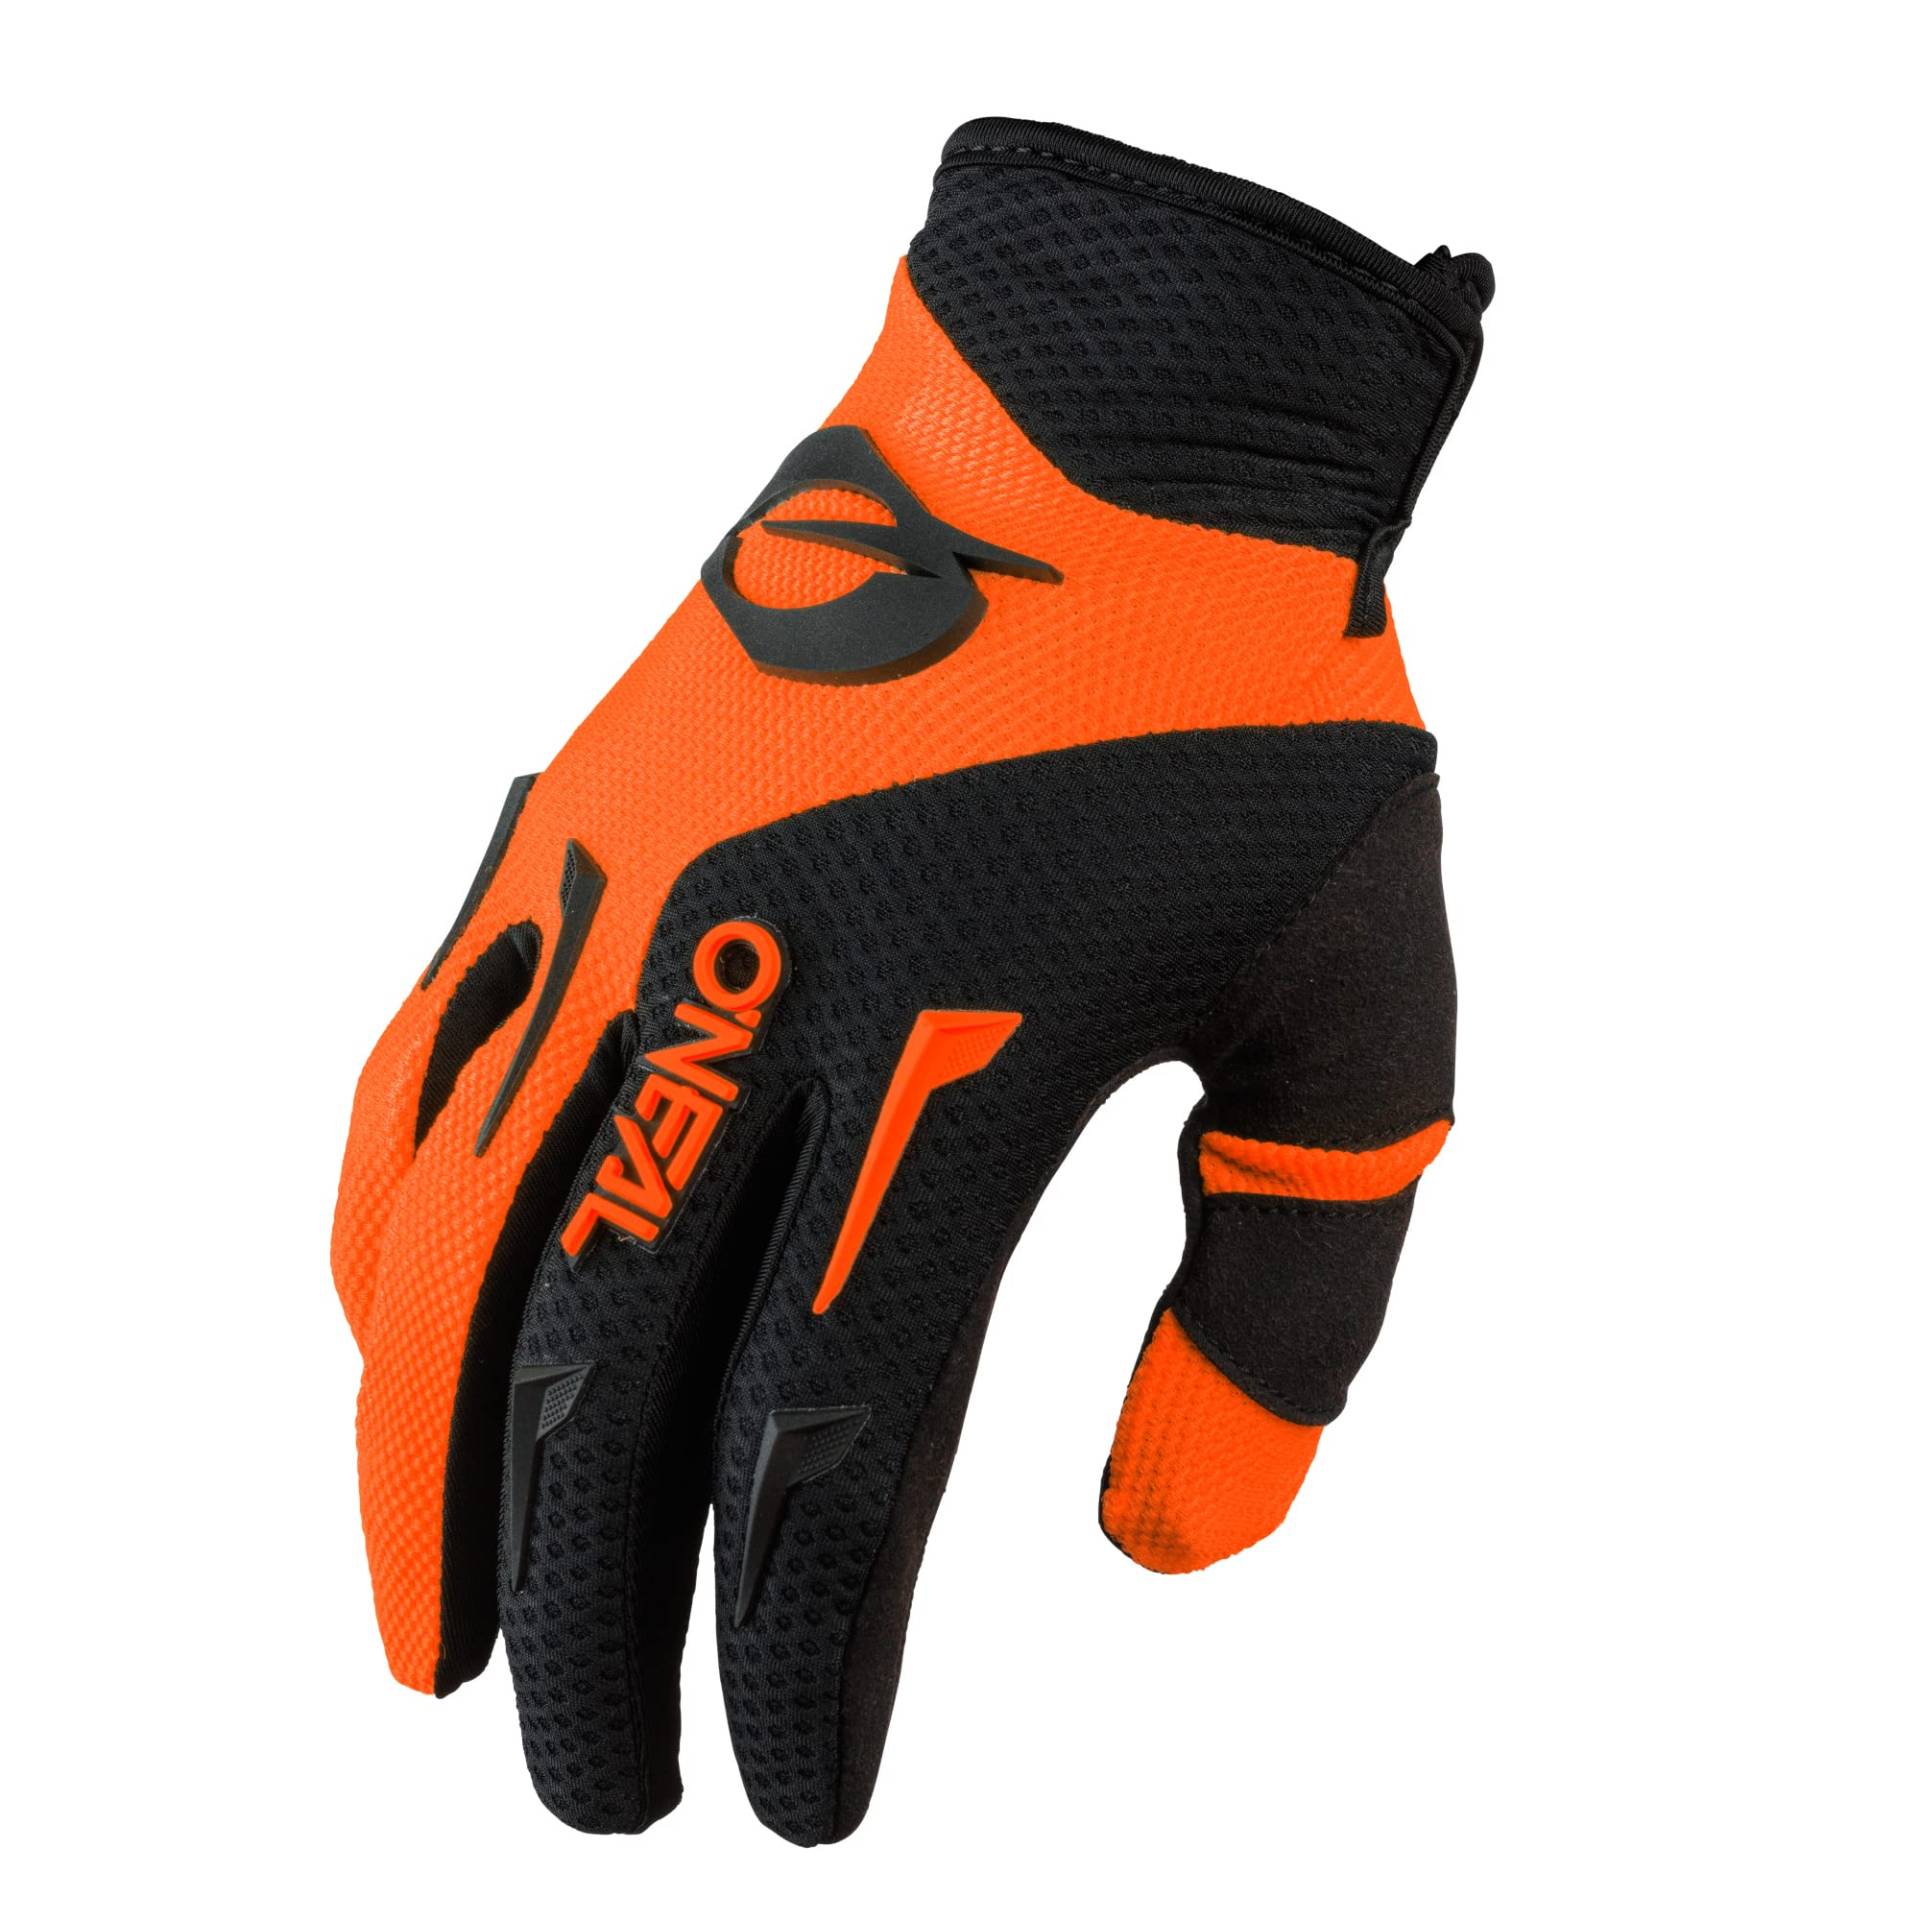 O'NEAL | Fahrrad- & Motocross-Handschuhe | MX MTB DH FR Downhill Freeride | Langlebige, Flexible Materialien, belüftete Handinnenfäche | Element Glove | Herren | Schwarz Neon-Orange | Größe S von O'NEAL